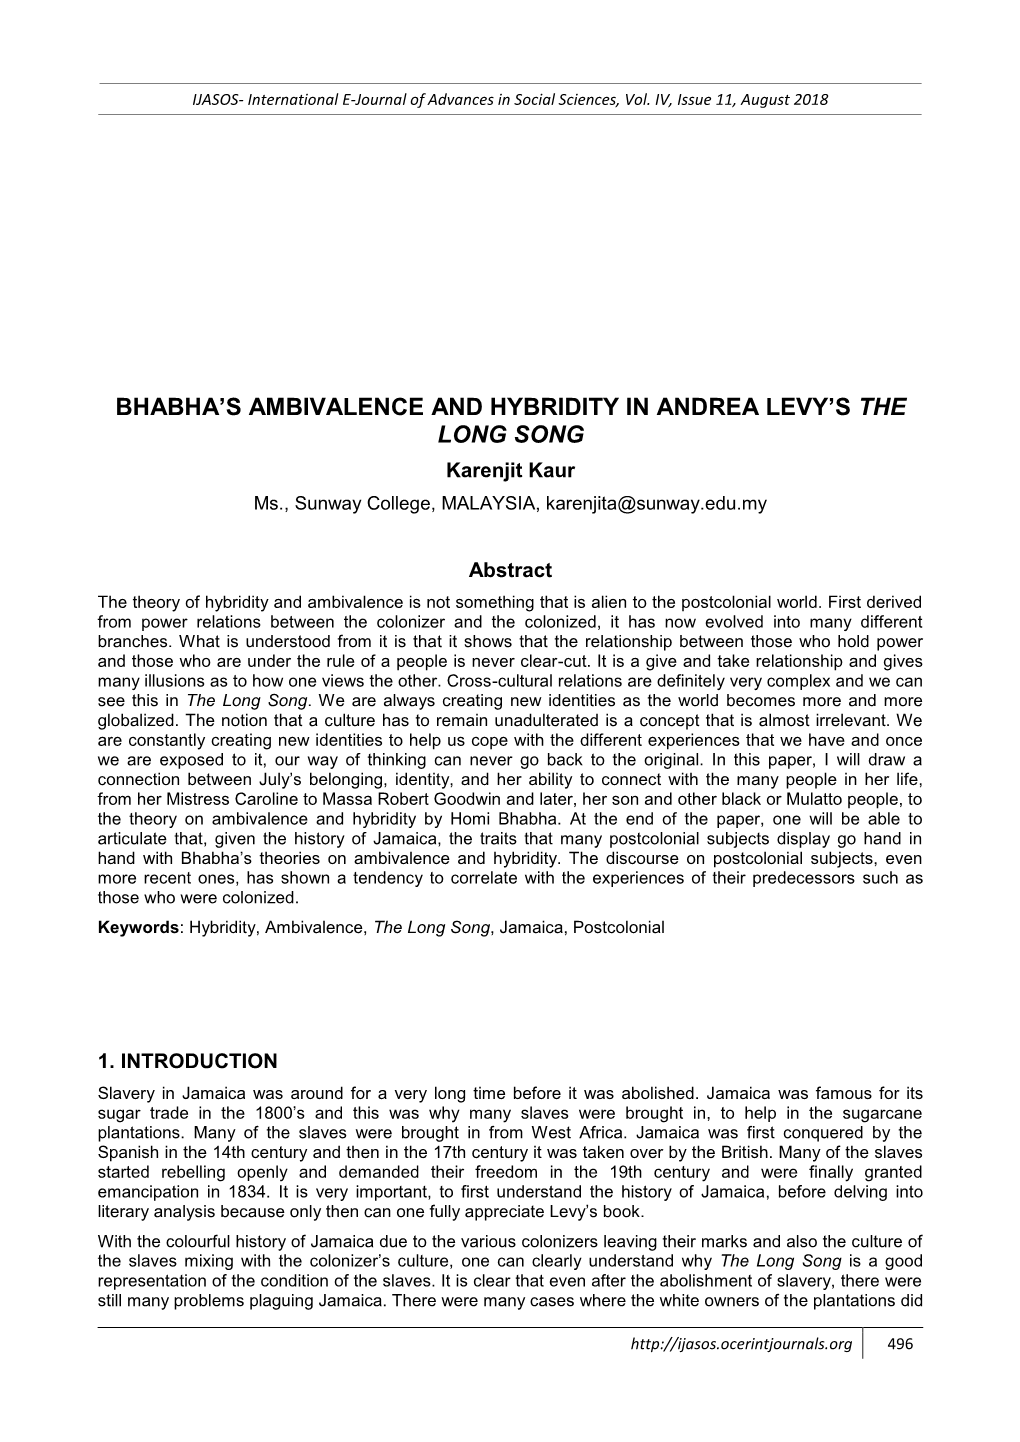 Bhabha's Ambivalence and Hybridity in Andrea Levy's